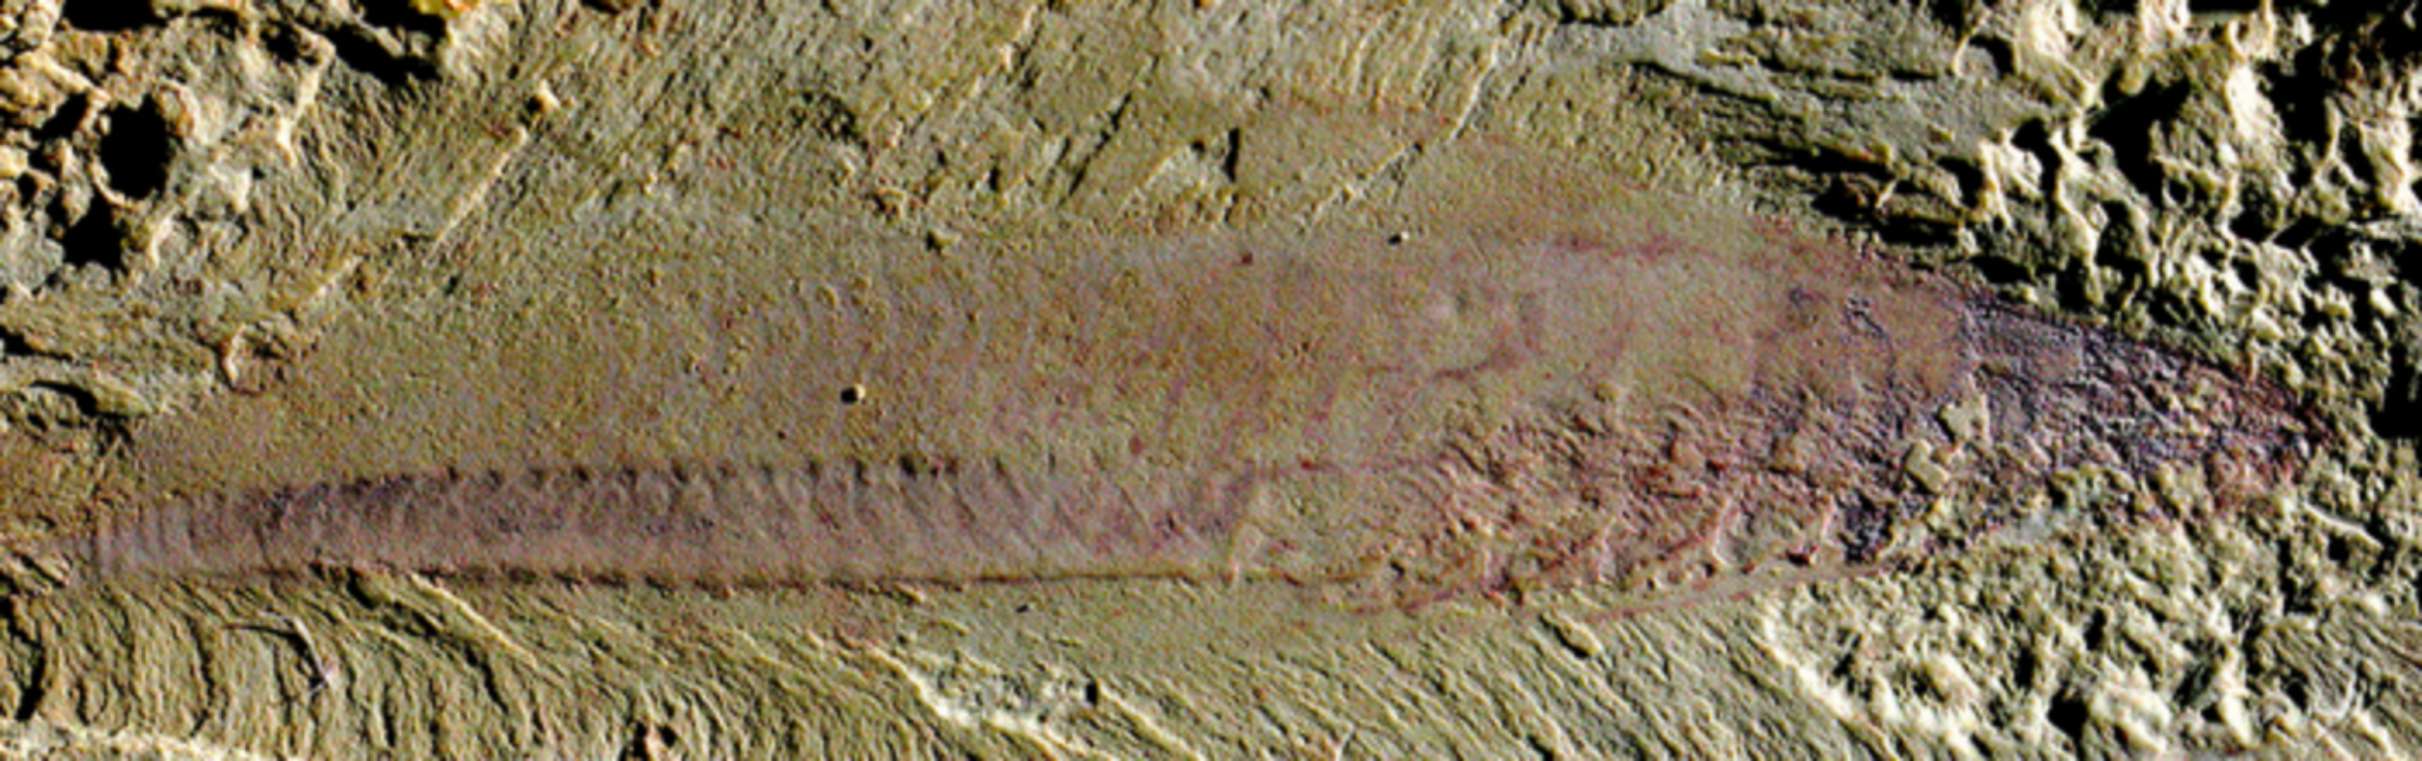 Balık fosili (Myllokunmingia)